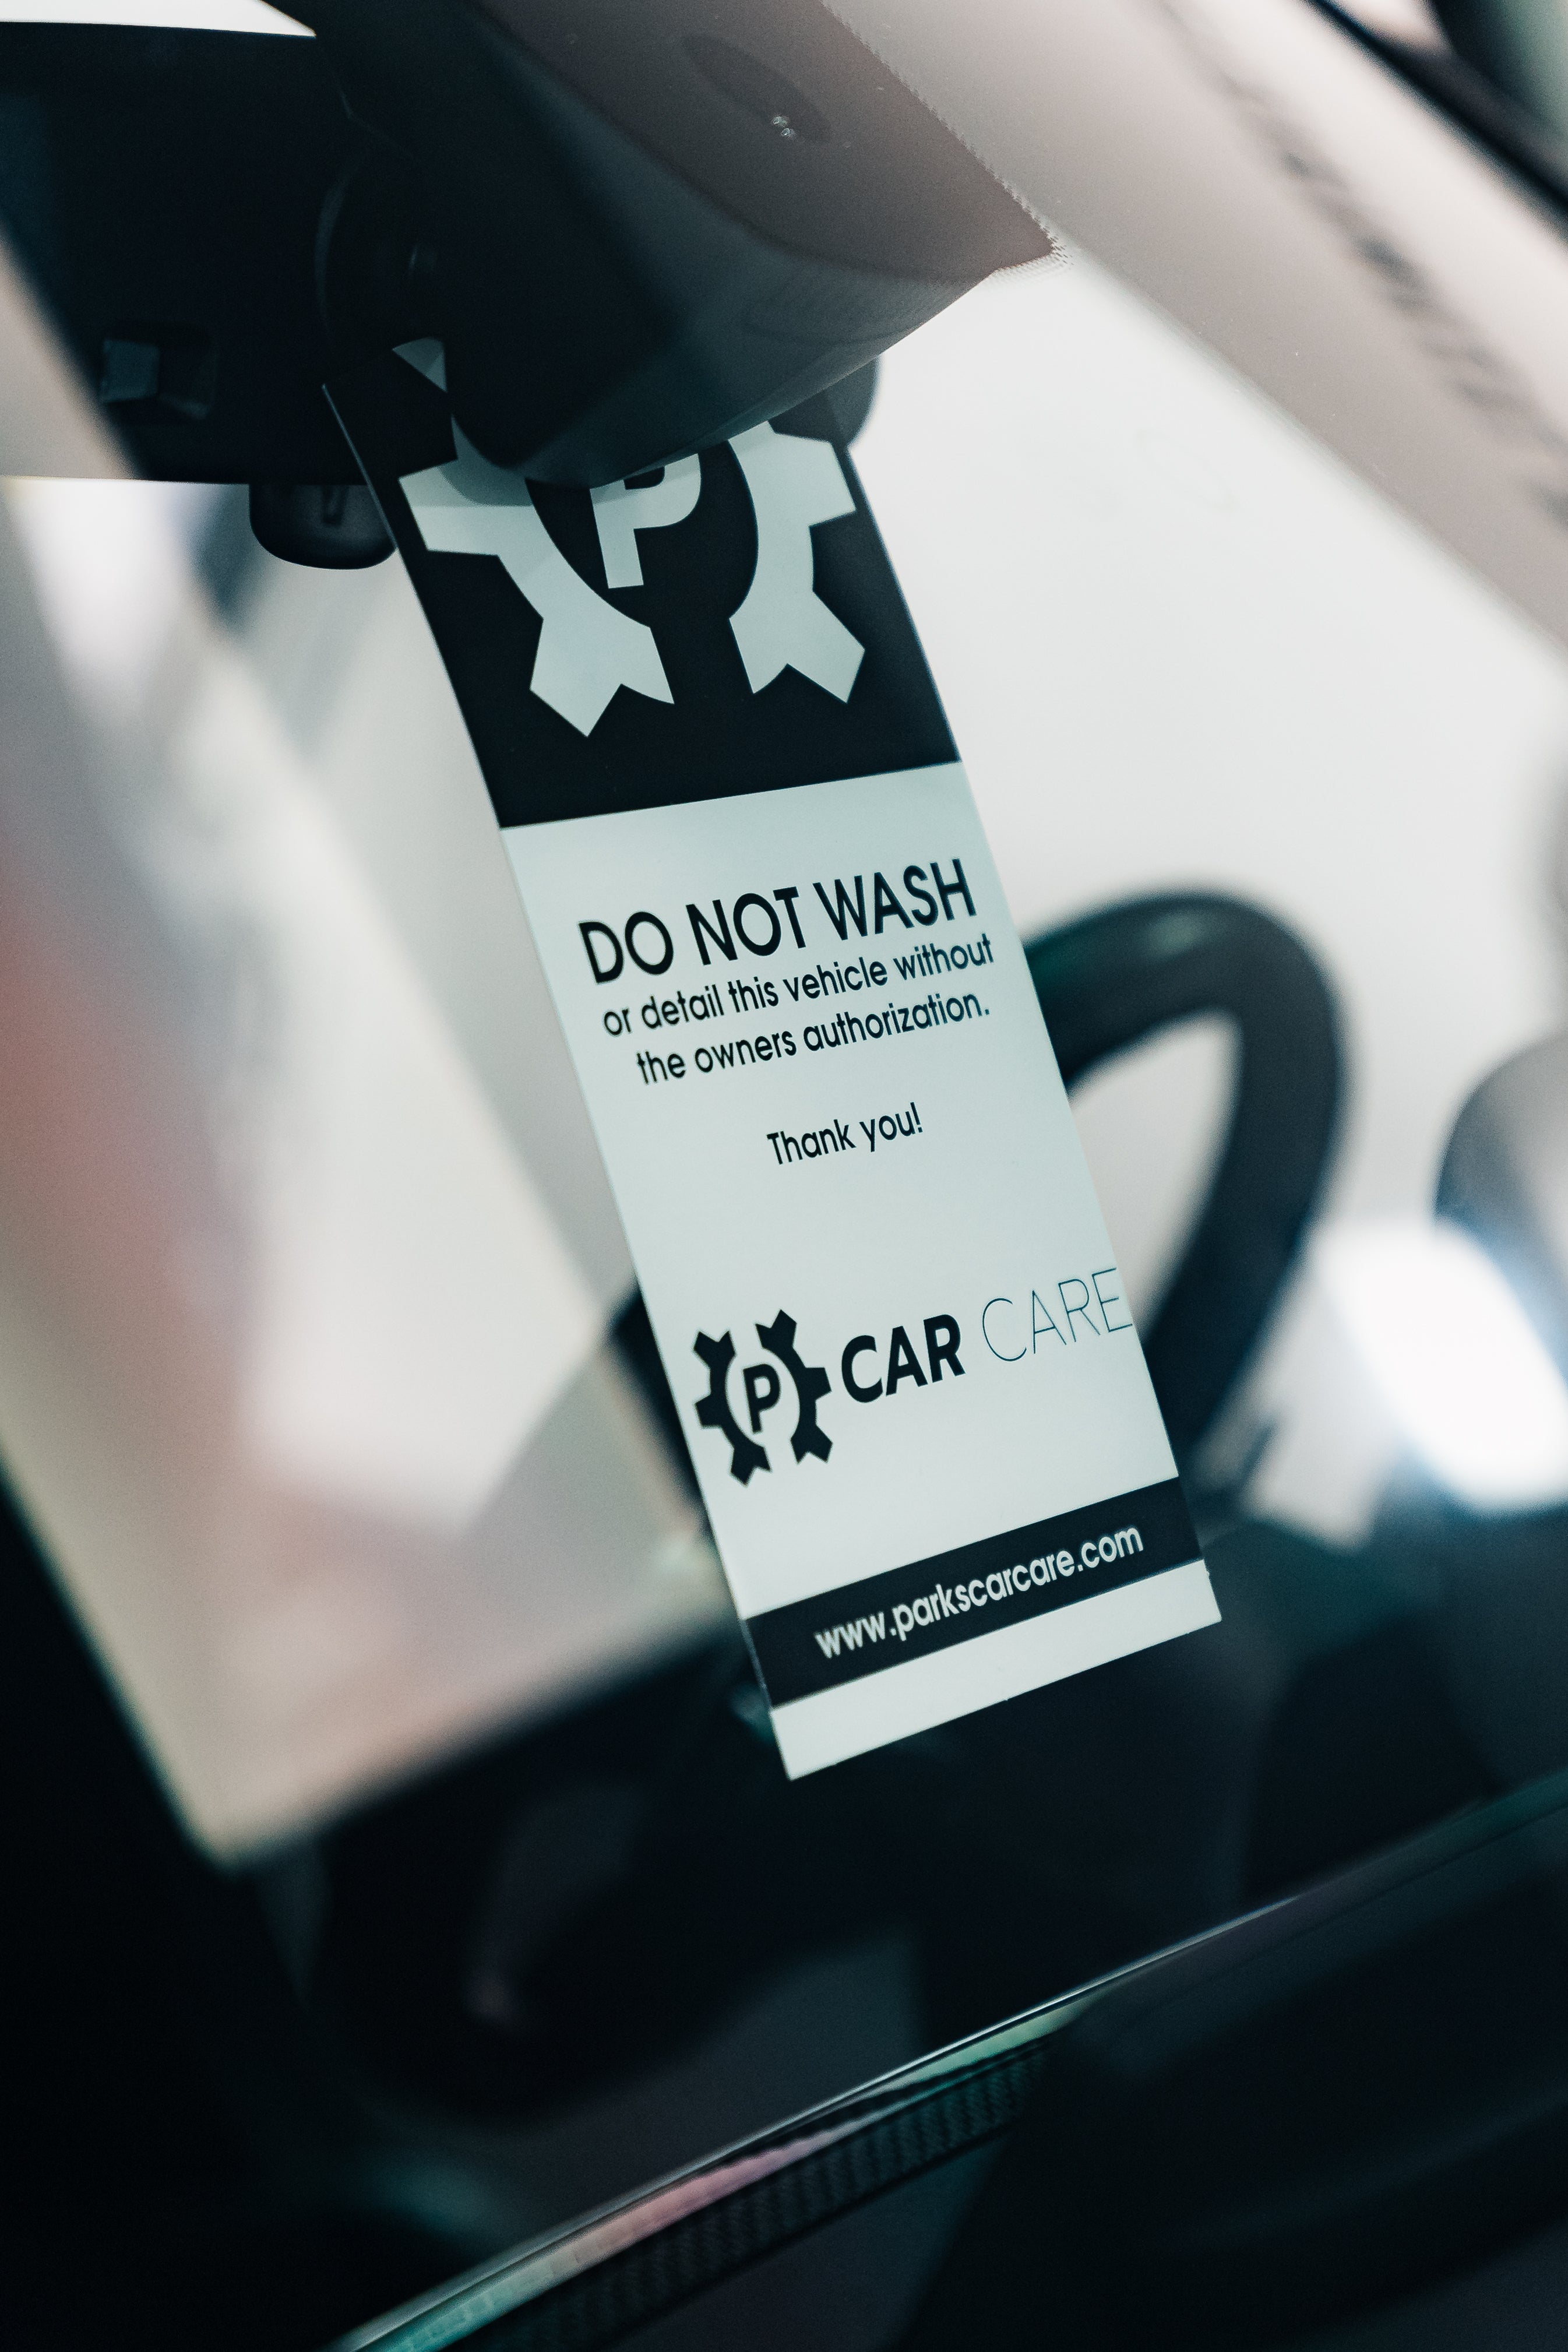 Do Not Wash Mirror Hanger - Parks Car Care 